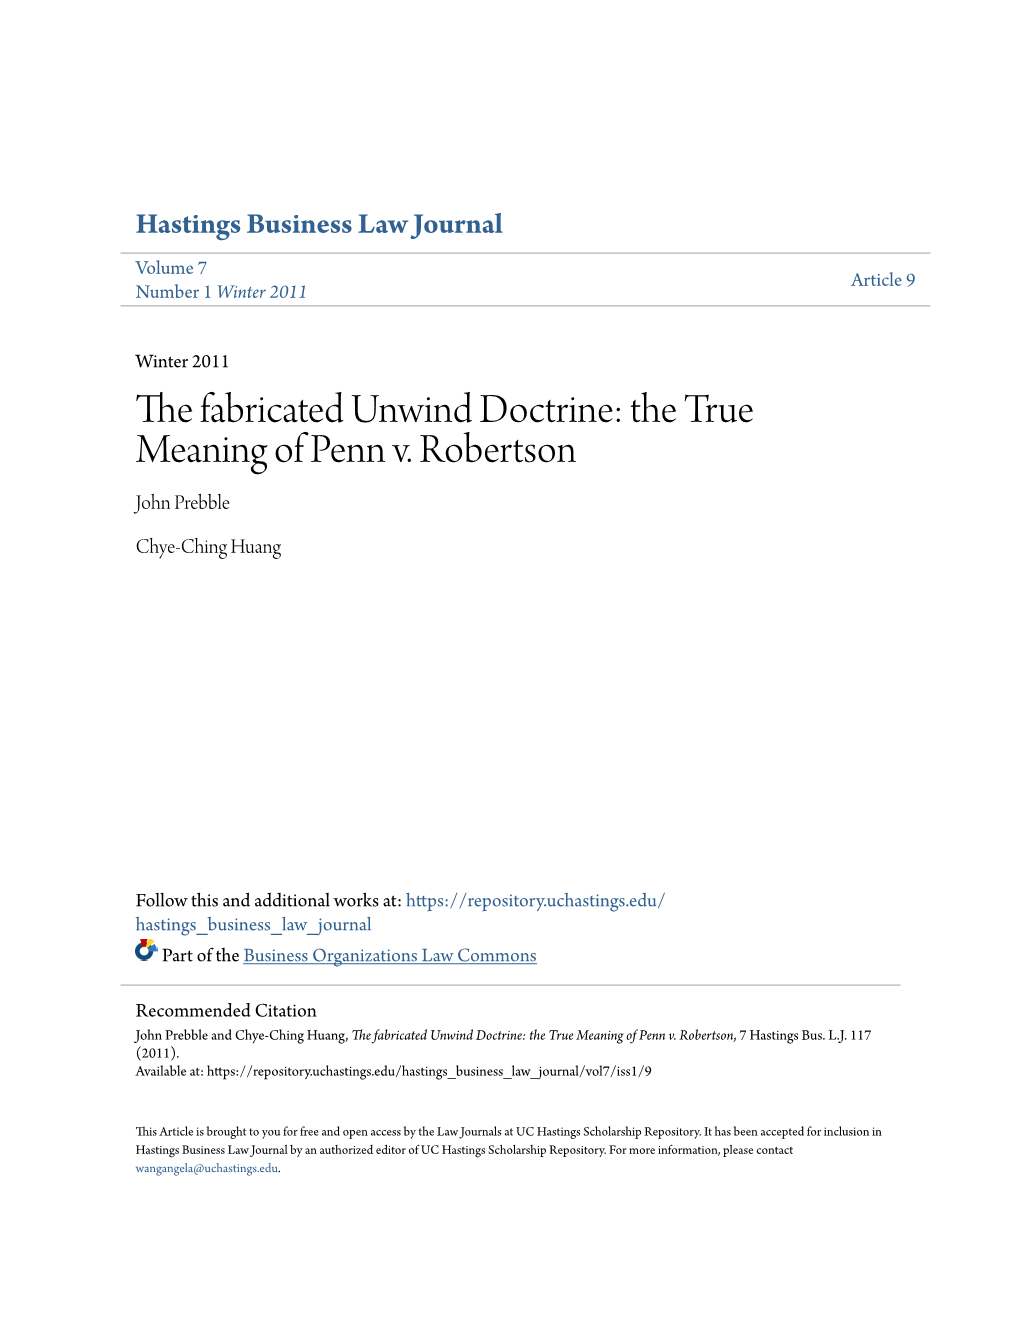 The Fabricated Unwind Doctrine: the True Meaning of Penn V. Robertson John Prebble